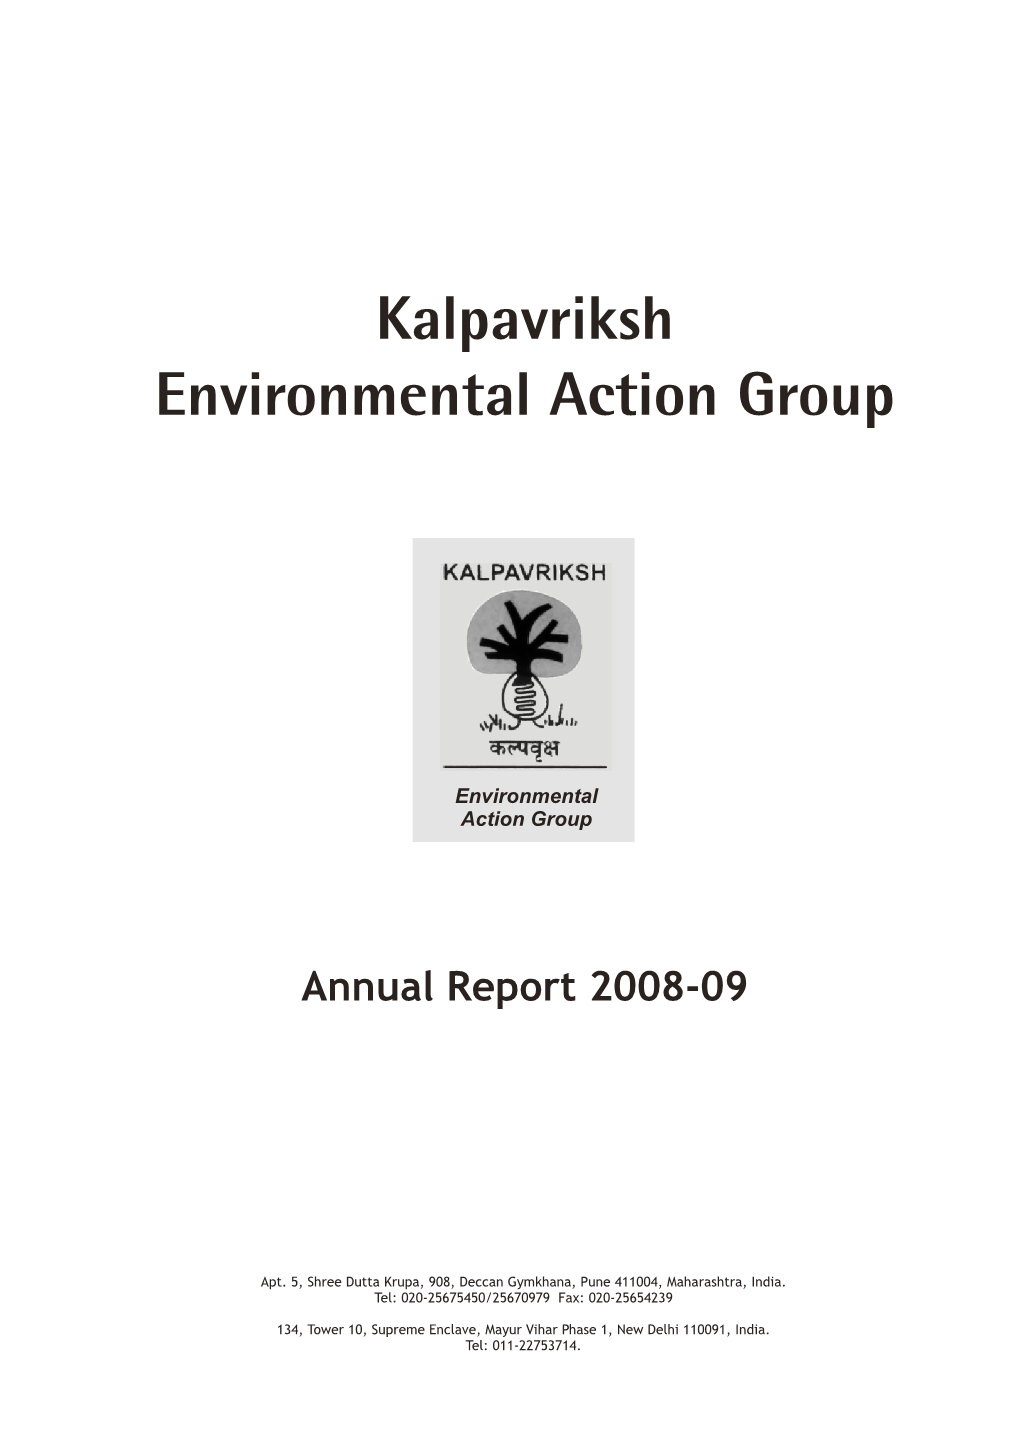 Kalpavriksh Environmental Action Group